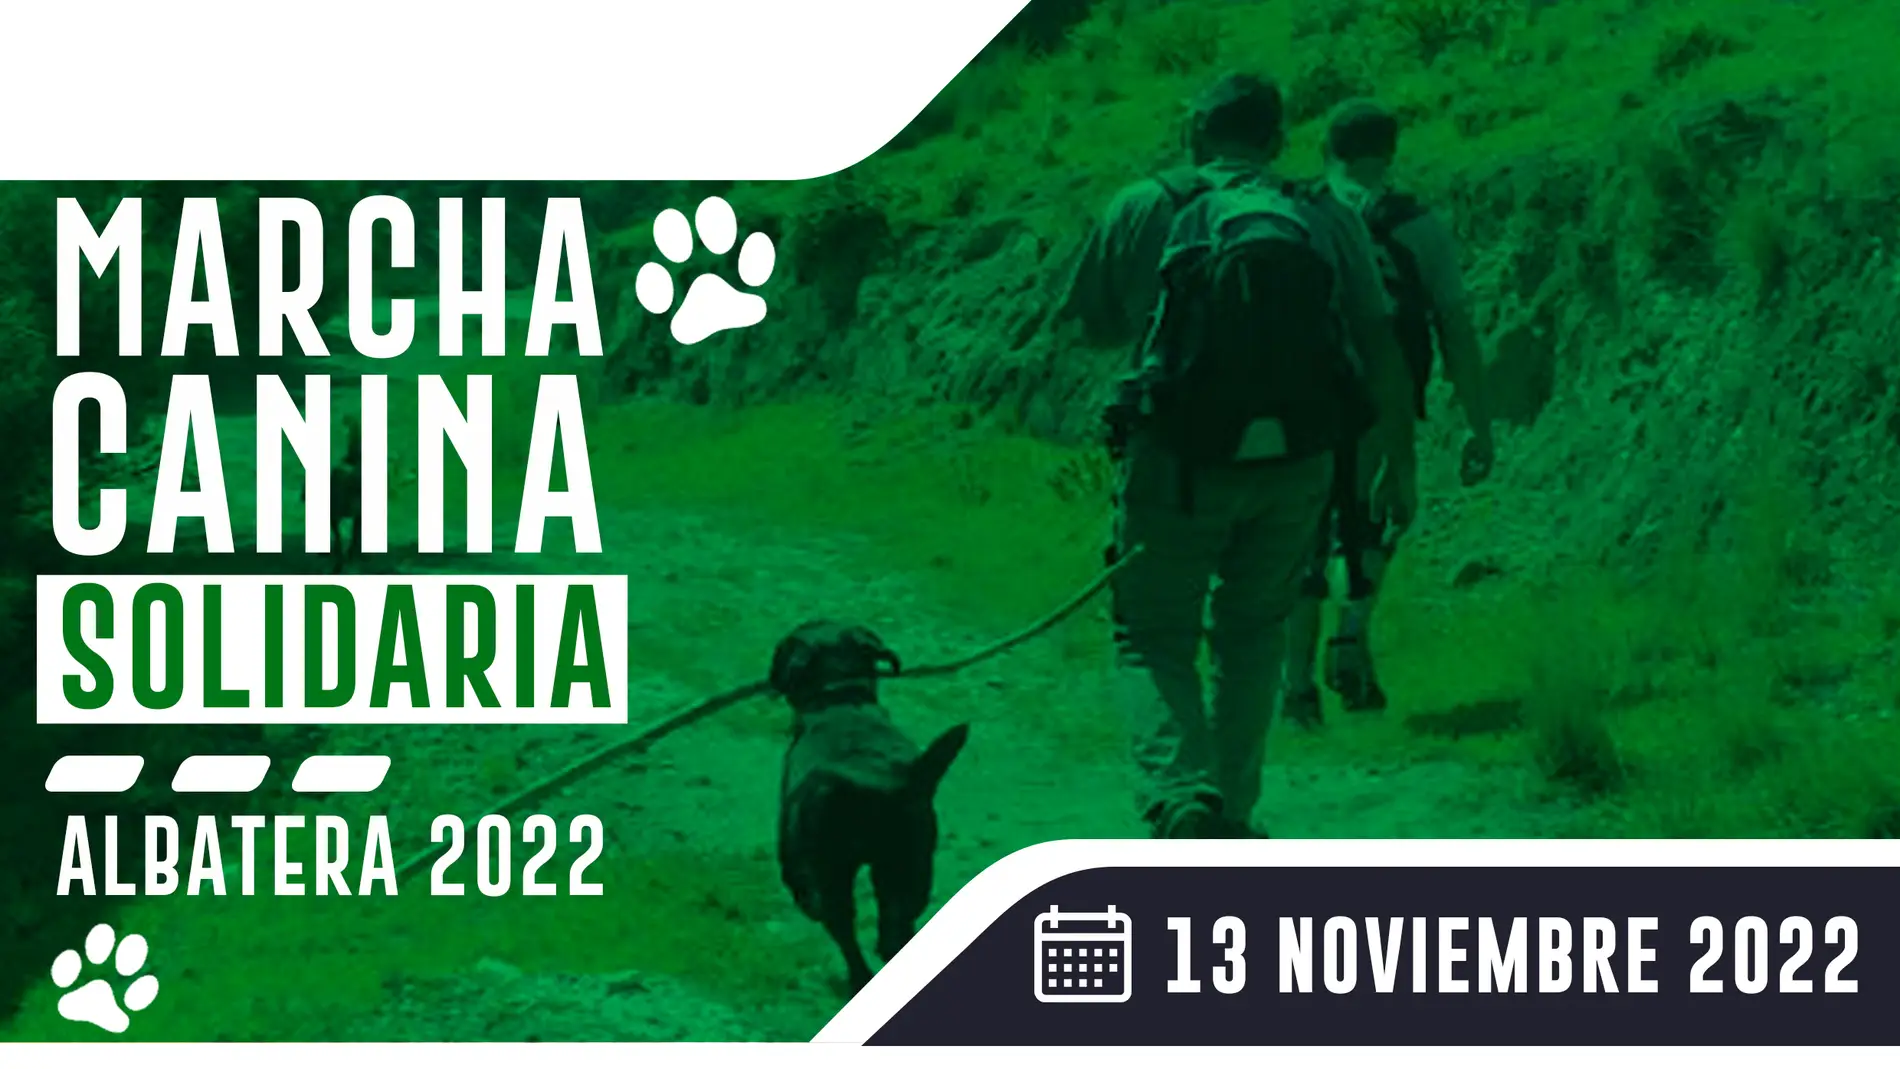 Deportes en Albatera presenta la primera marcha solidaria canina 